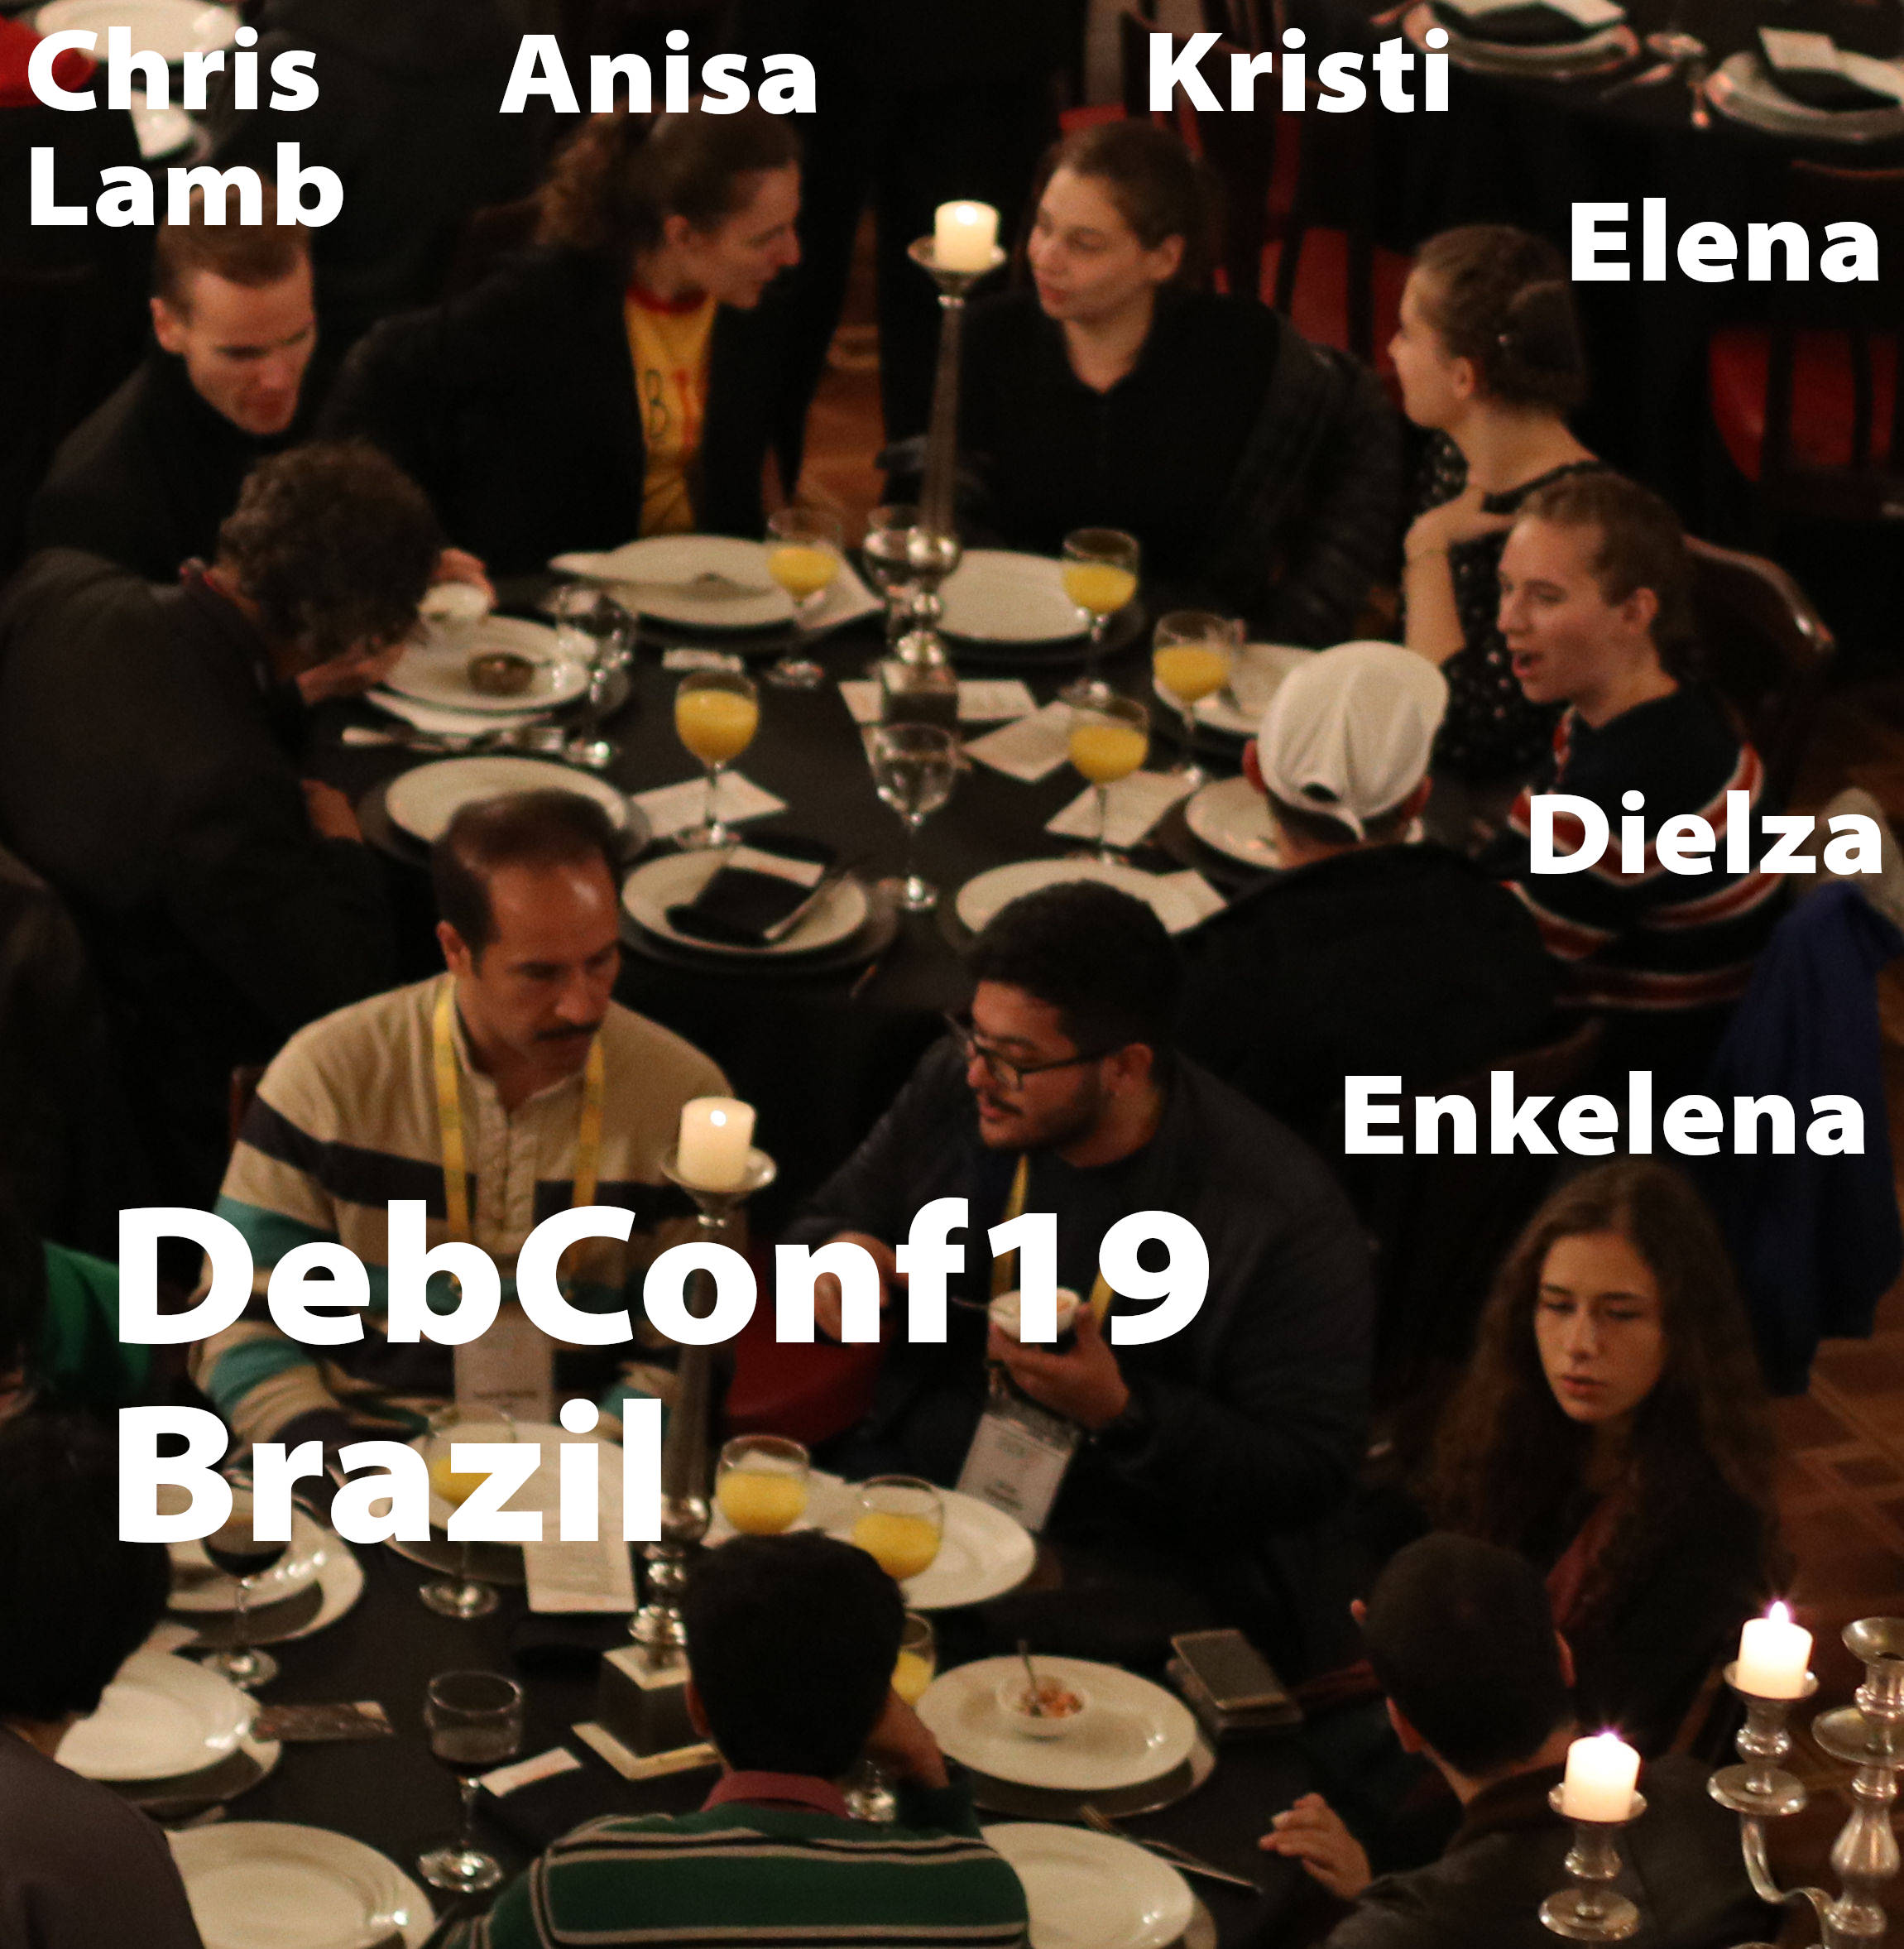 DebConf19, Curitiba, Brazil, dinner, Chris Lamb, albanian women